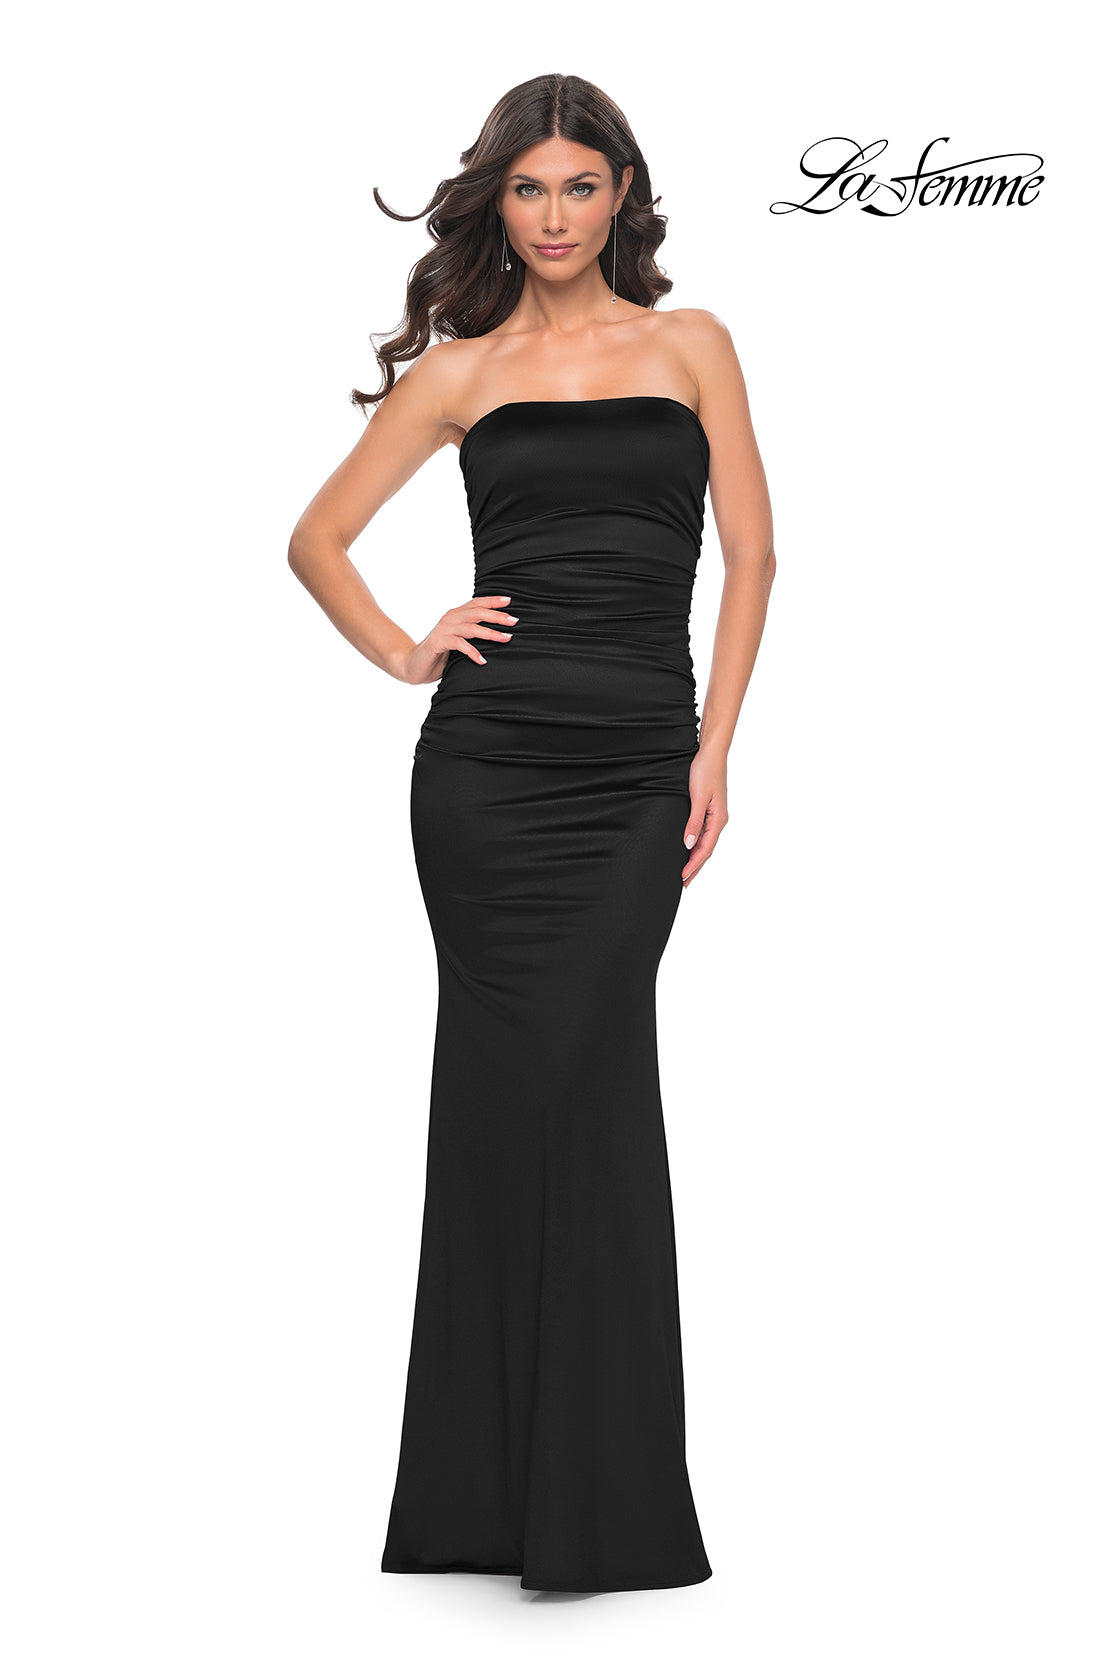 La-Femme-32300-Square-Neckline-Zipper-Back-Ruched-Liquid-Jersey-Column-Fitted-Black-Evening-Dress-B-Chic-Fashions-Prom-Dress